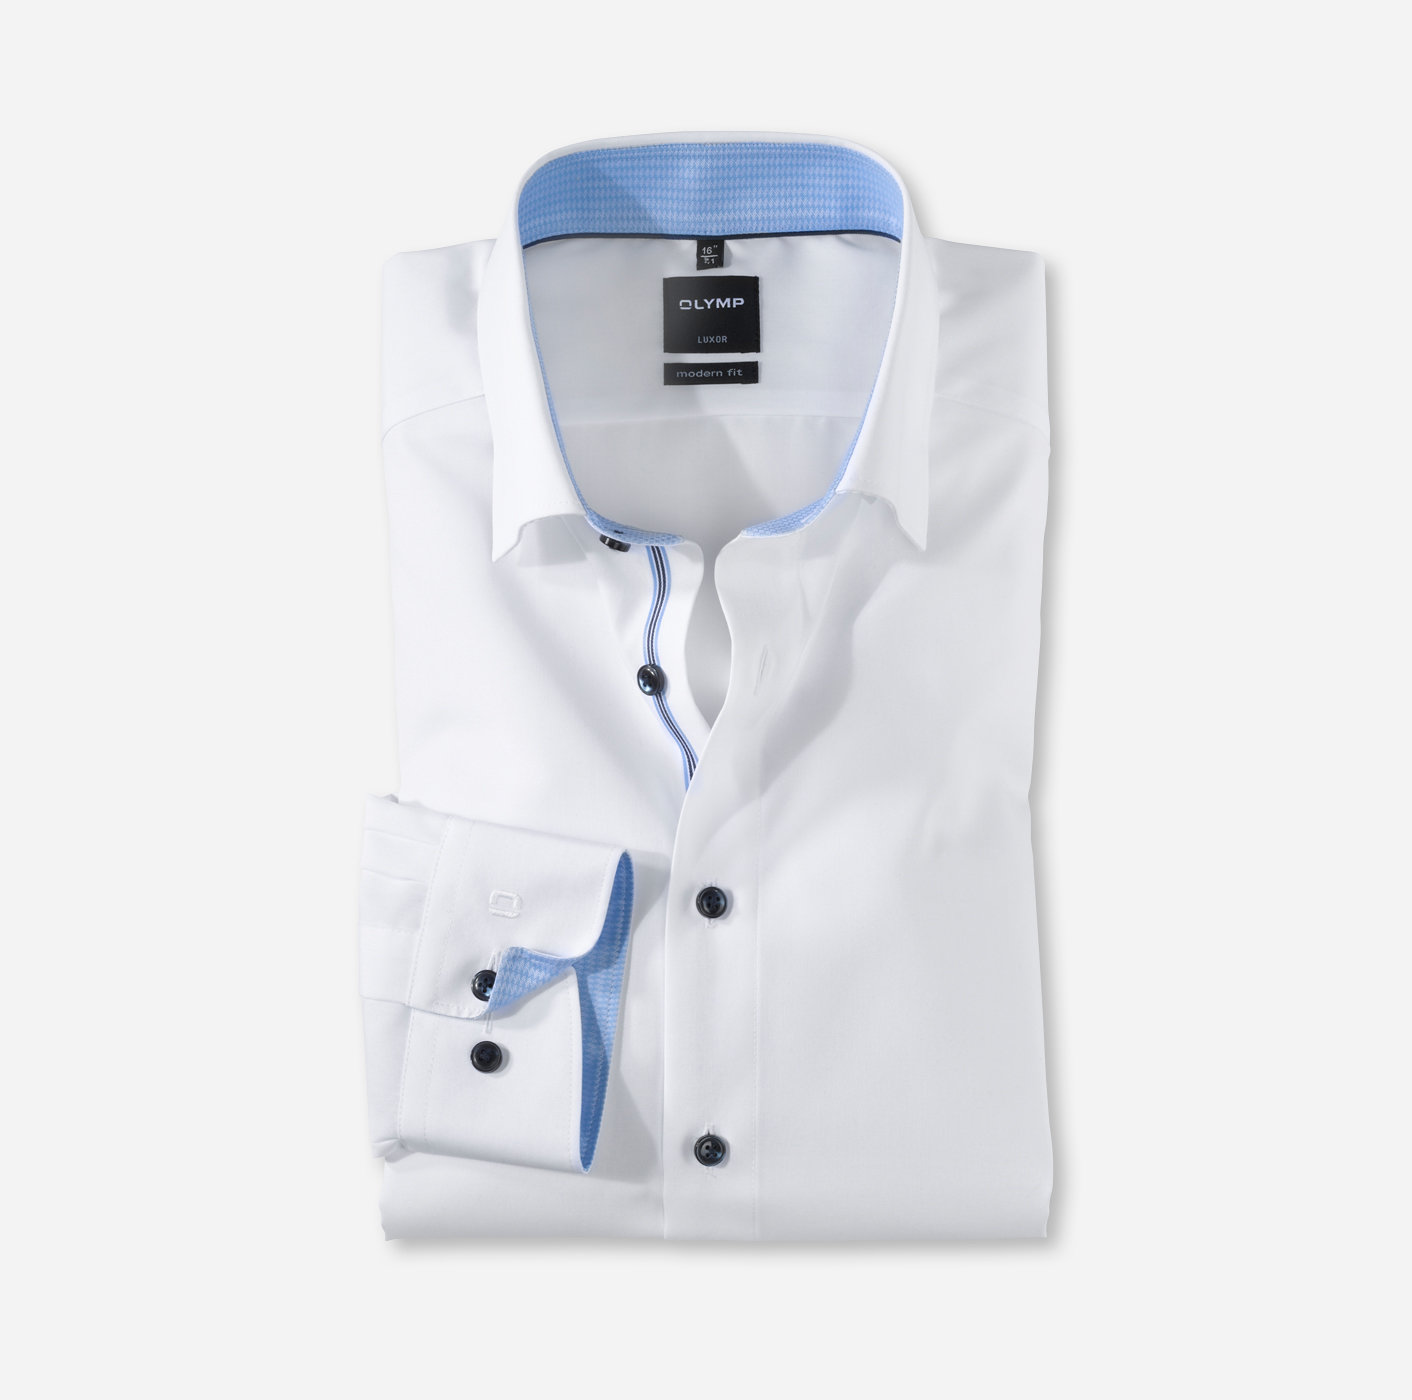 OLYMP Luxor, modern fit, Business shirt, Boutons sous col, Bleu